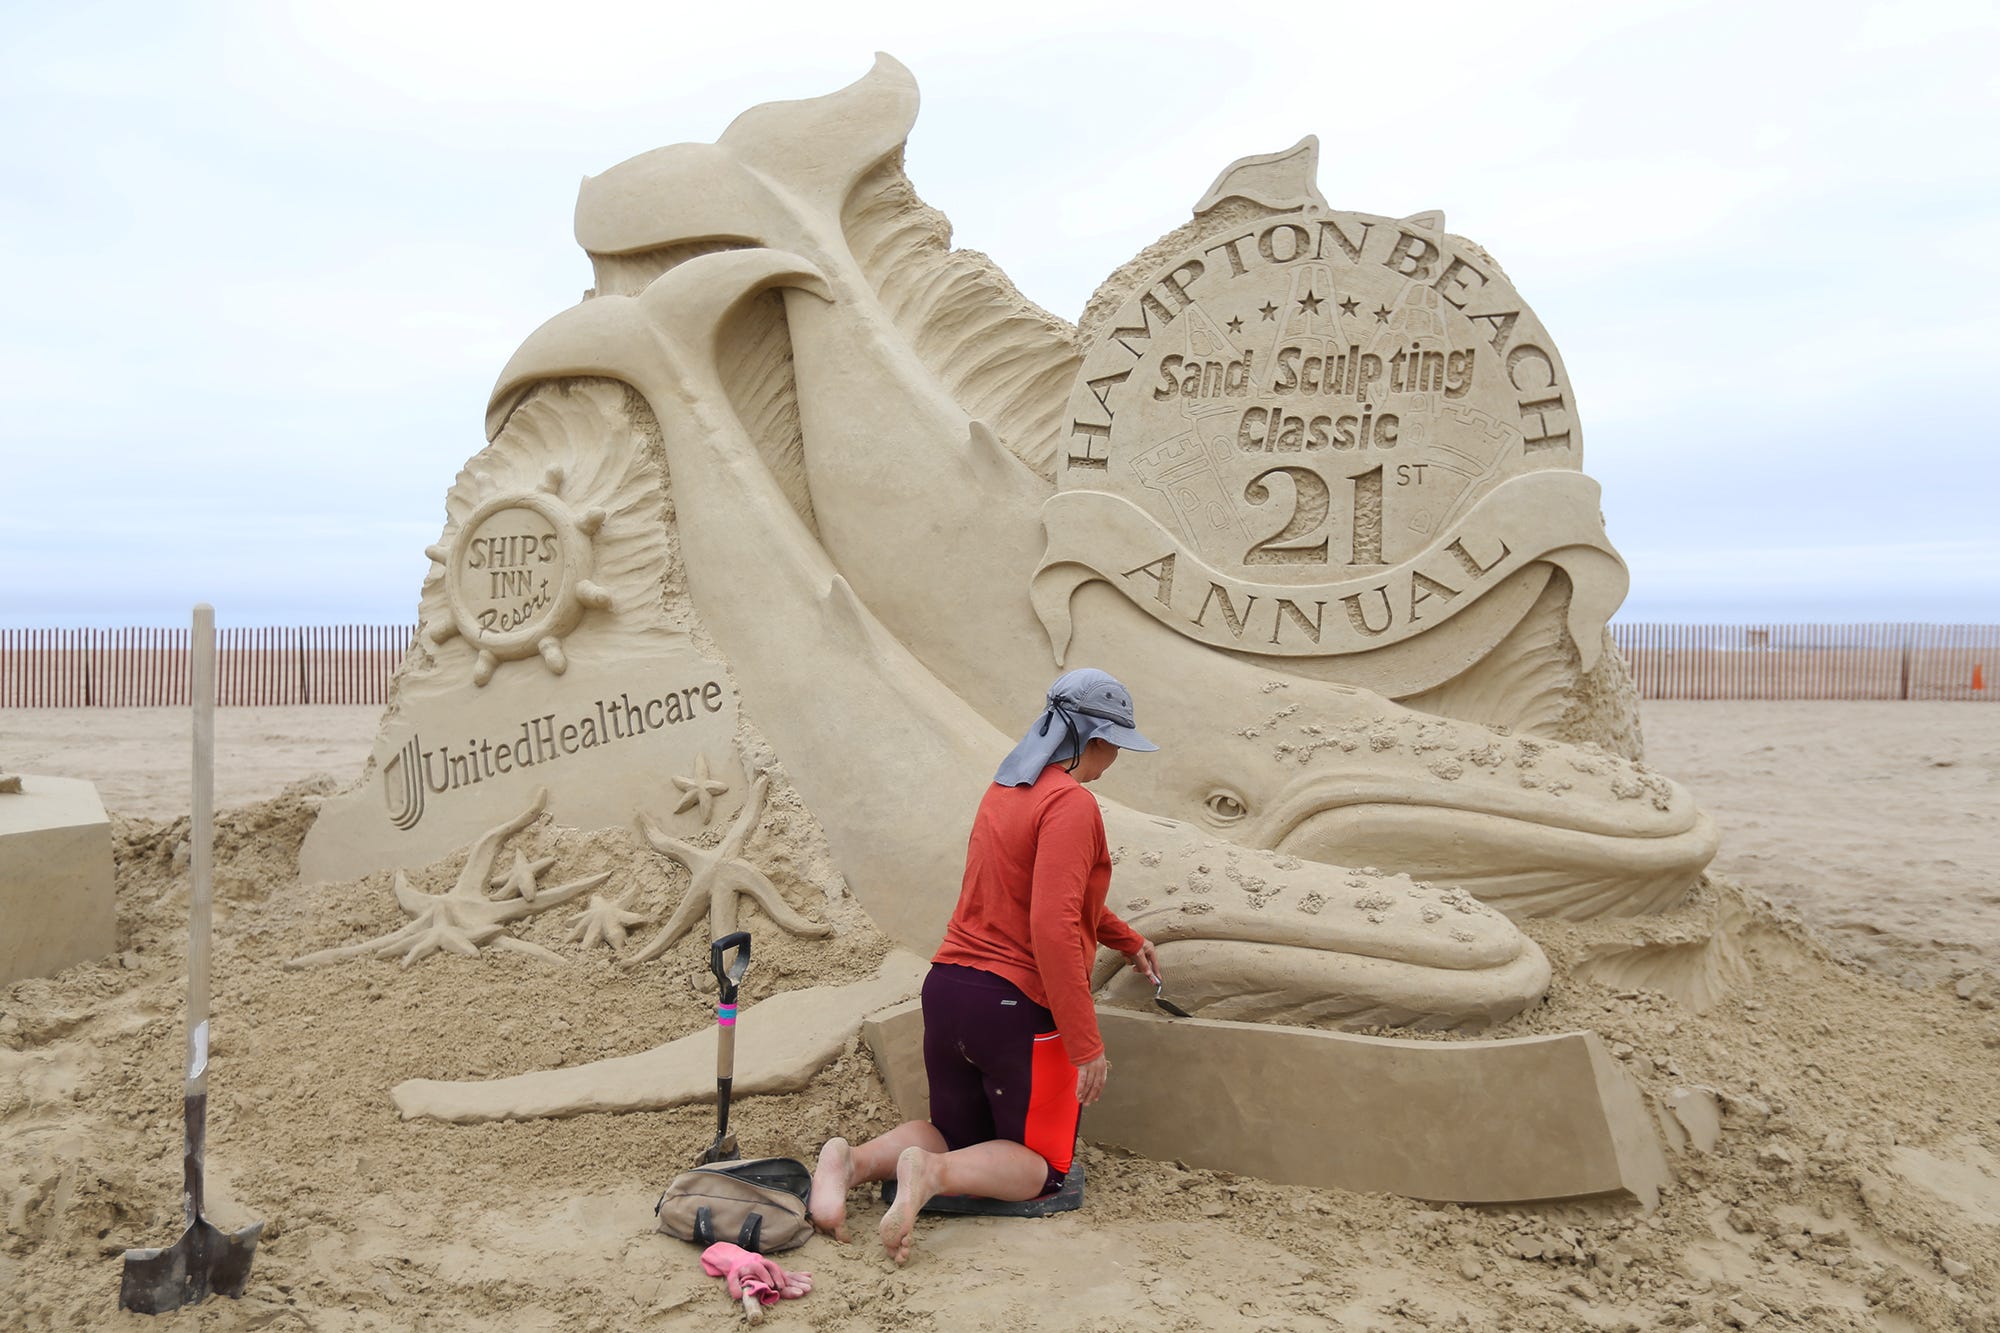 Hampton Beach Sand Sculpting Classic 2021 with world champ John Gowdy